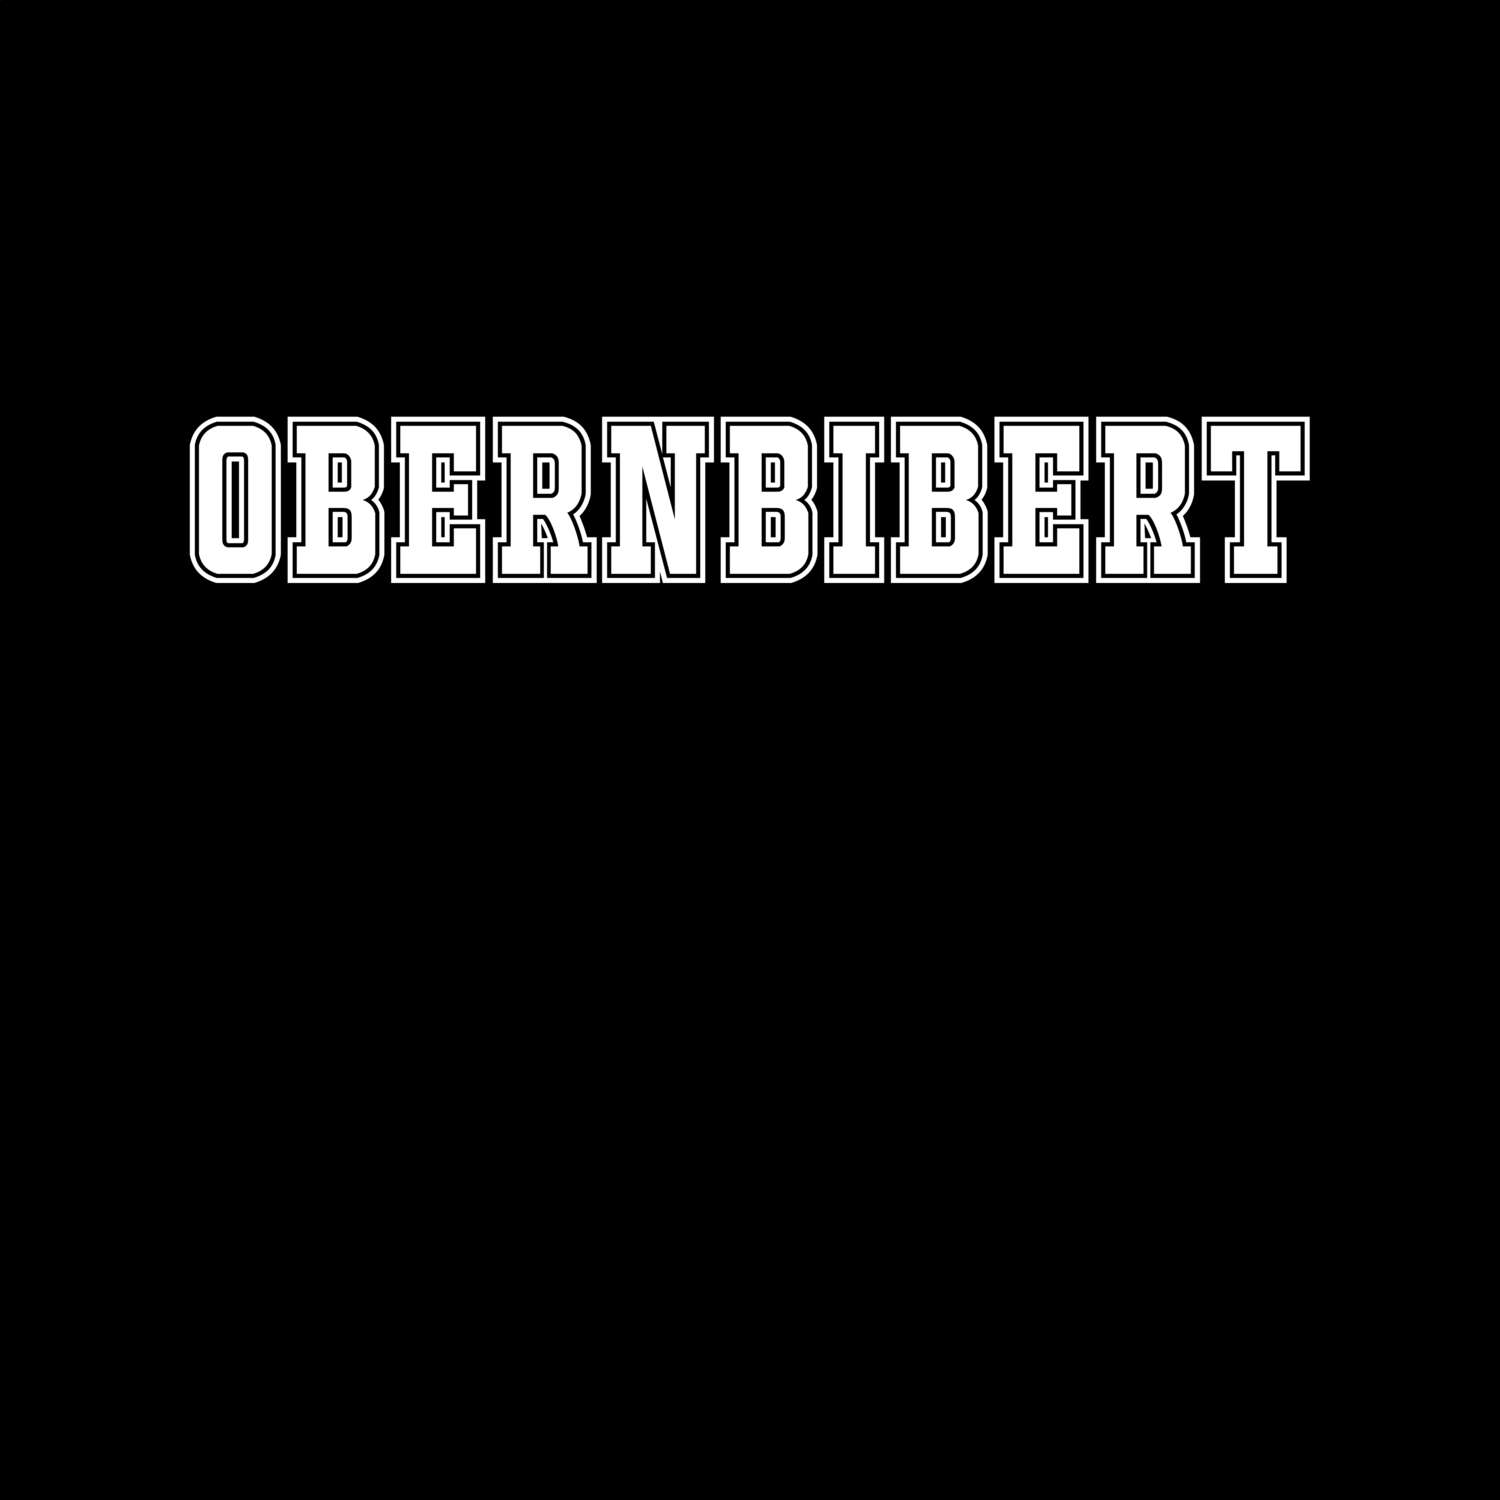 Obernbibert T-Shirt »Classic«